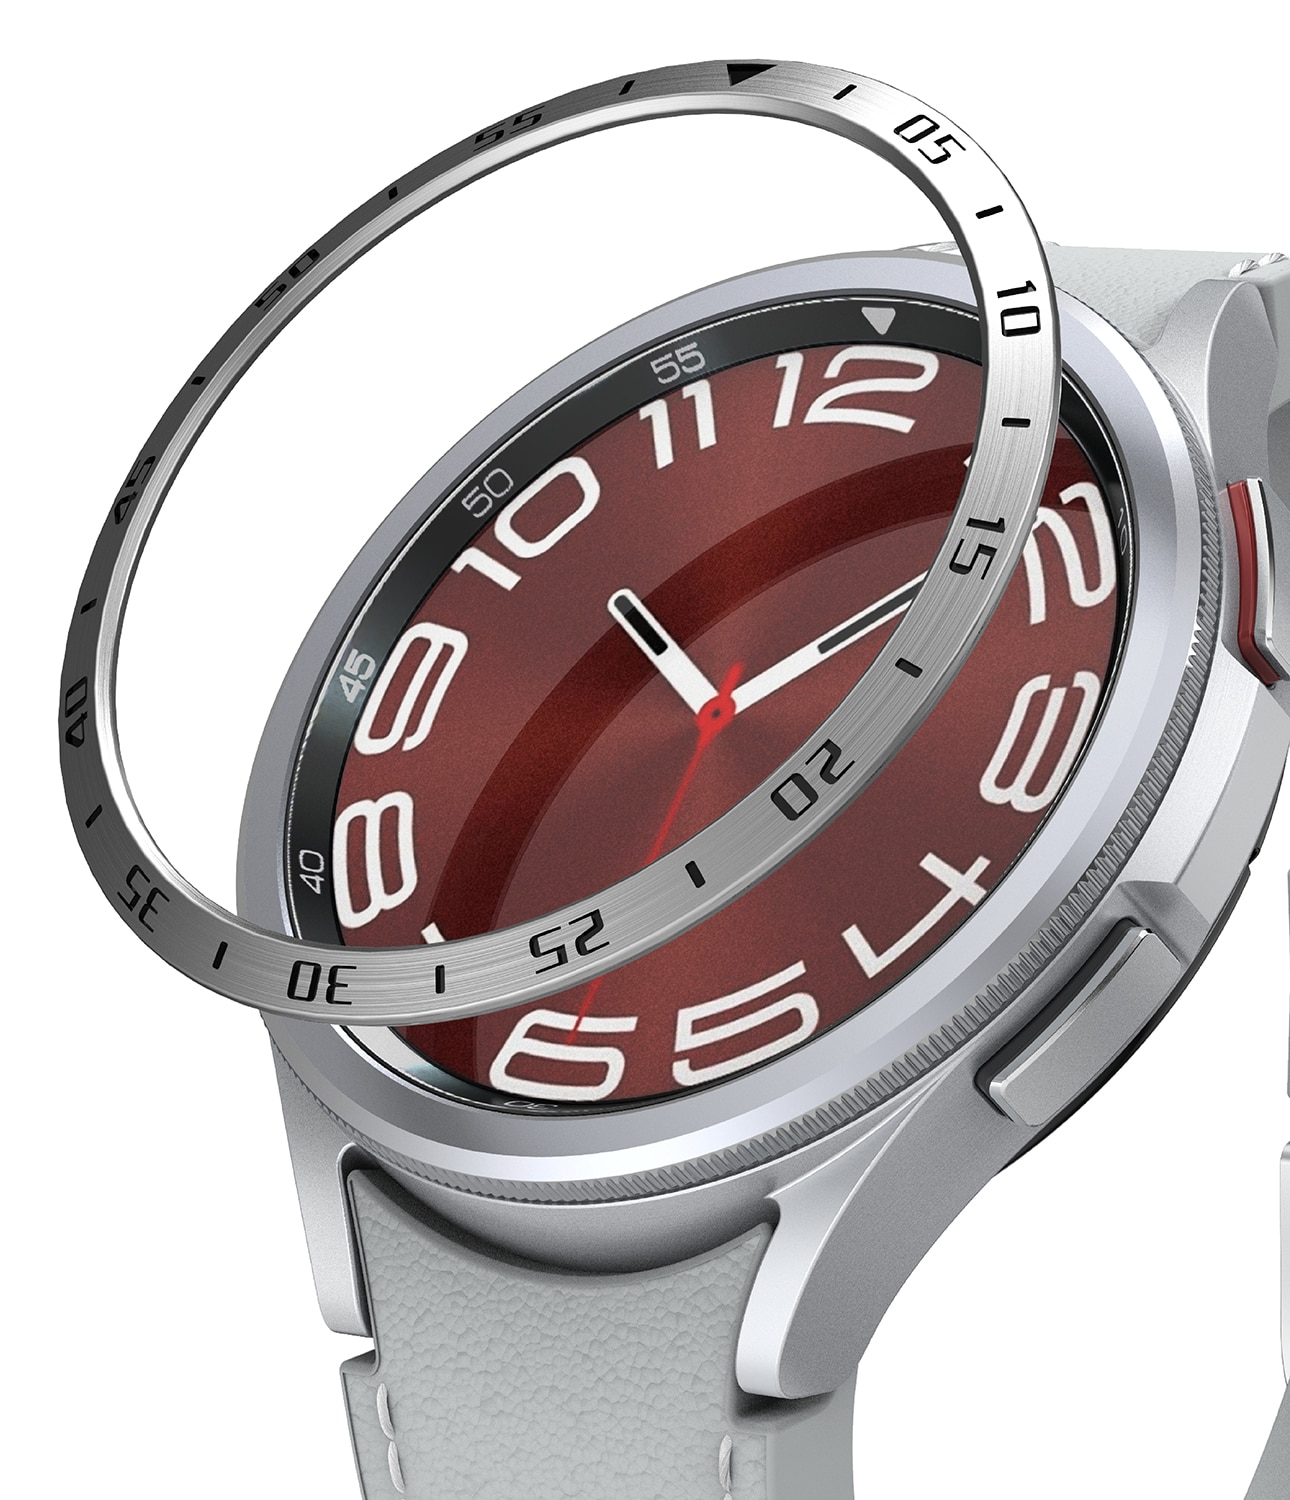 Bezel Styling Samsung Galaxy Watch 6 Classic 47mm  Silber